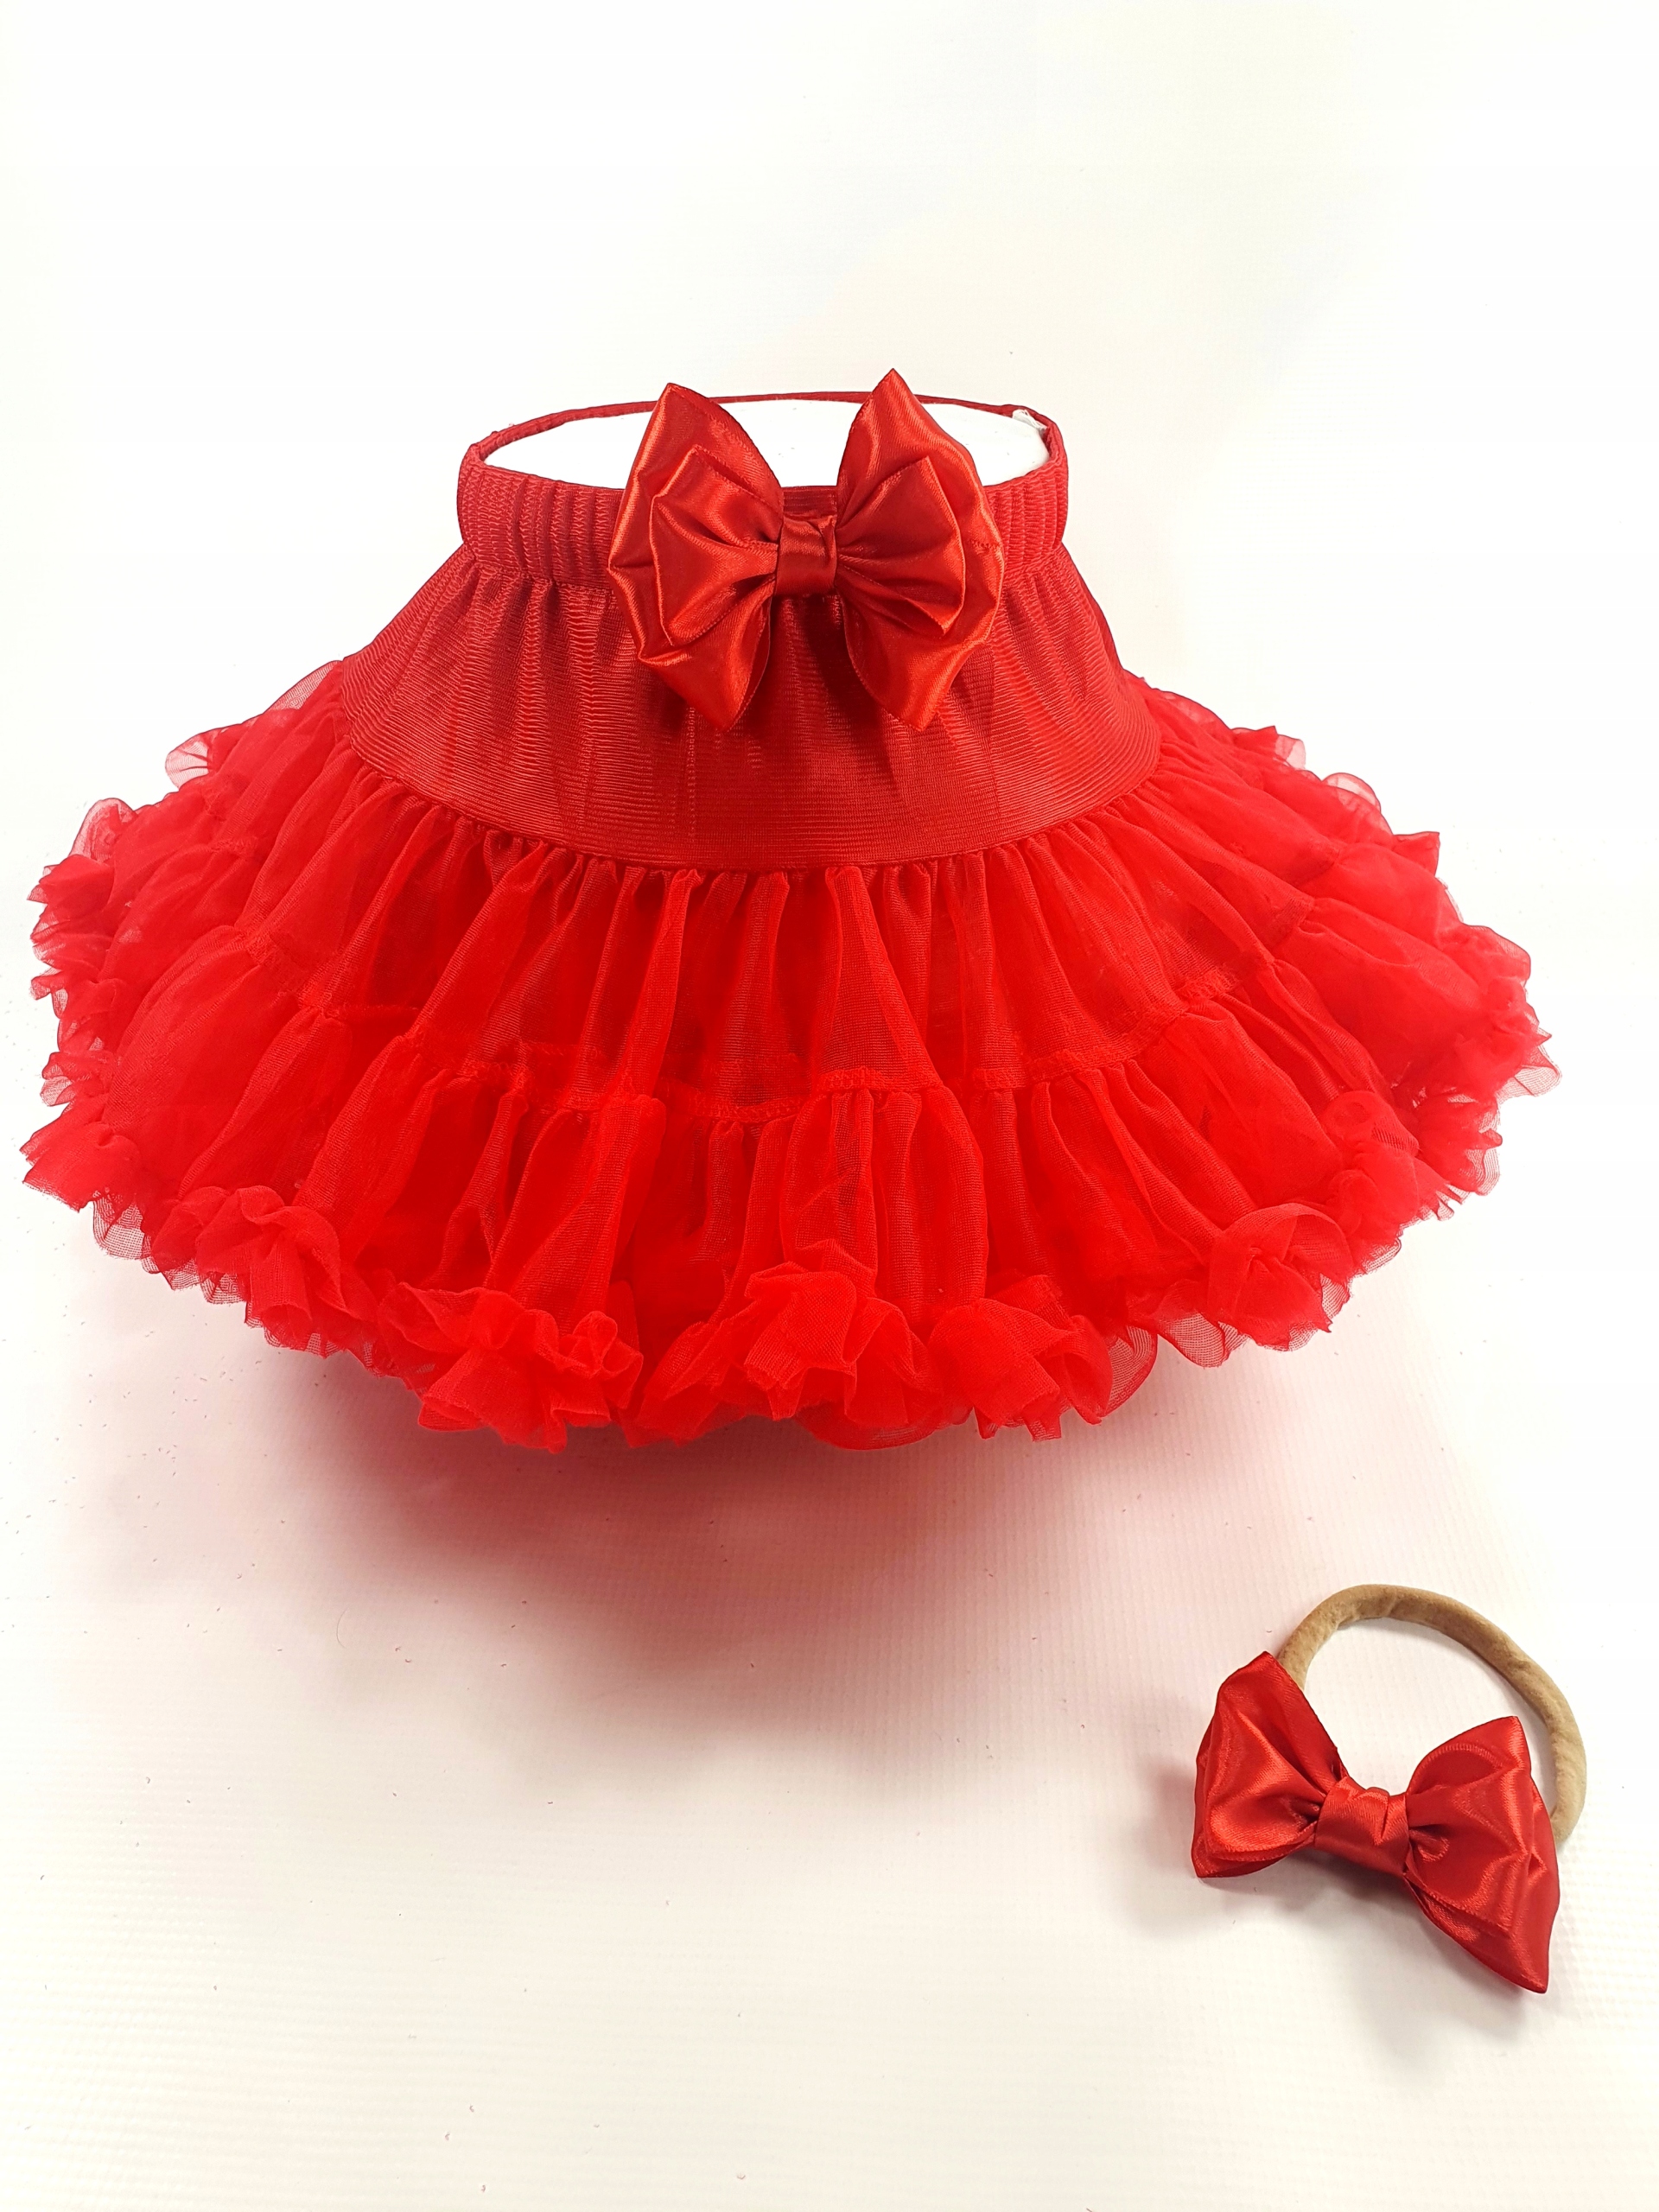 Юбка-юбка + повязка на голову ROCZEK красного цвета